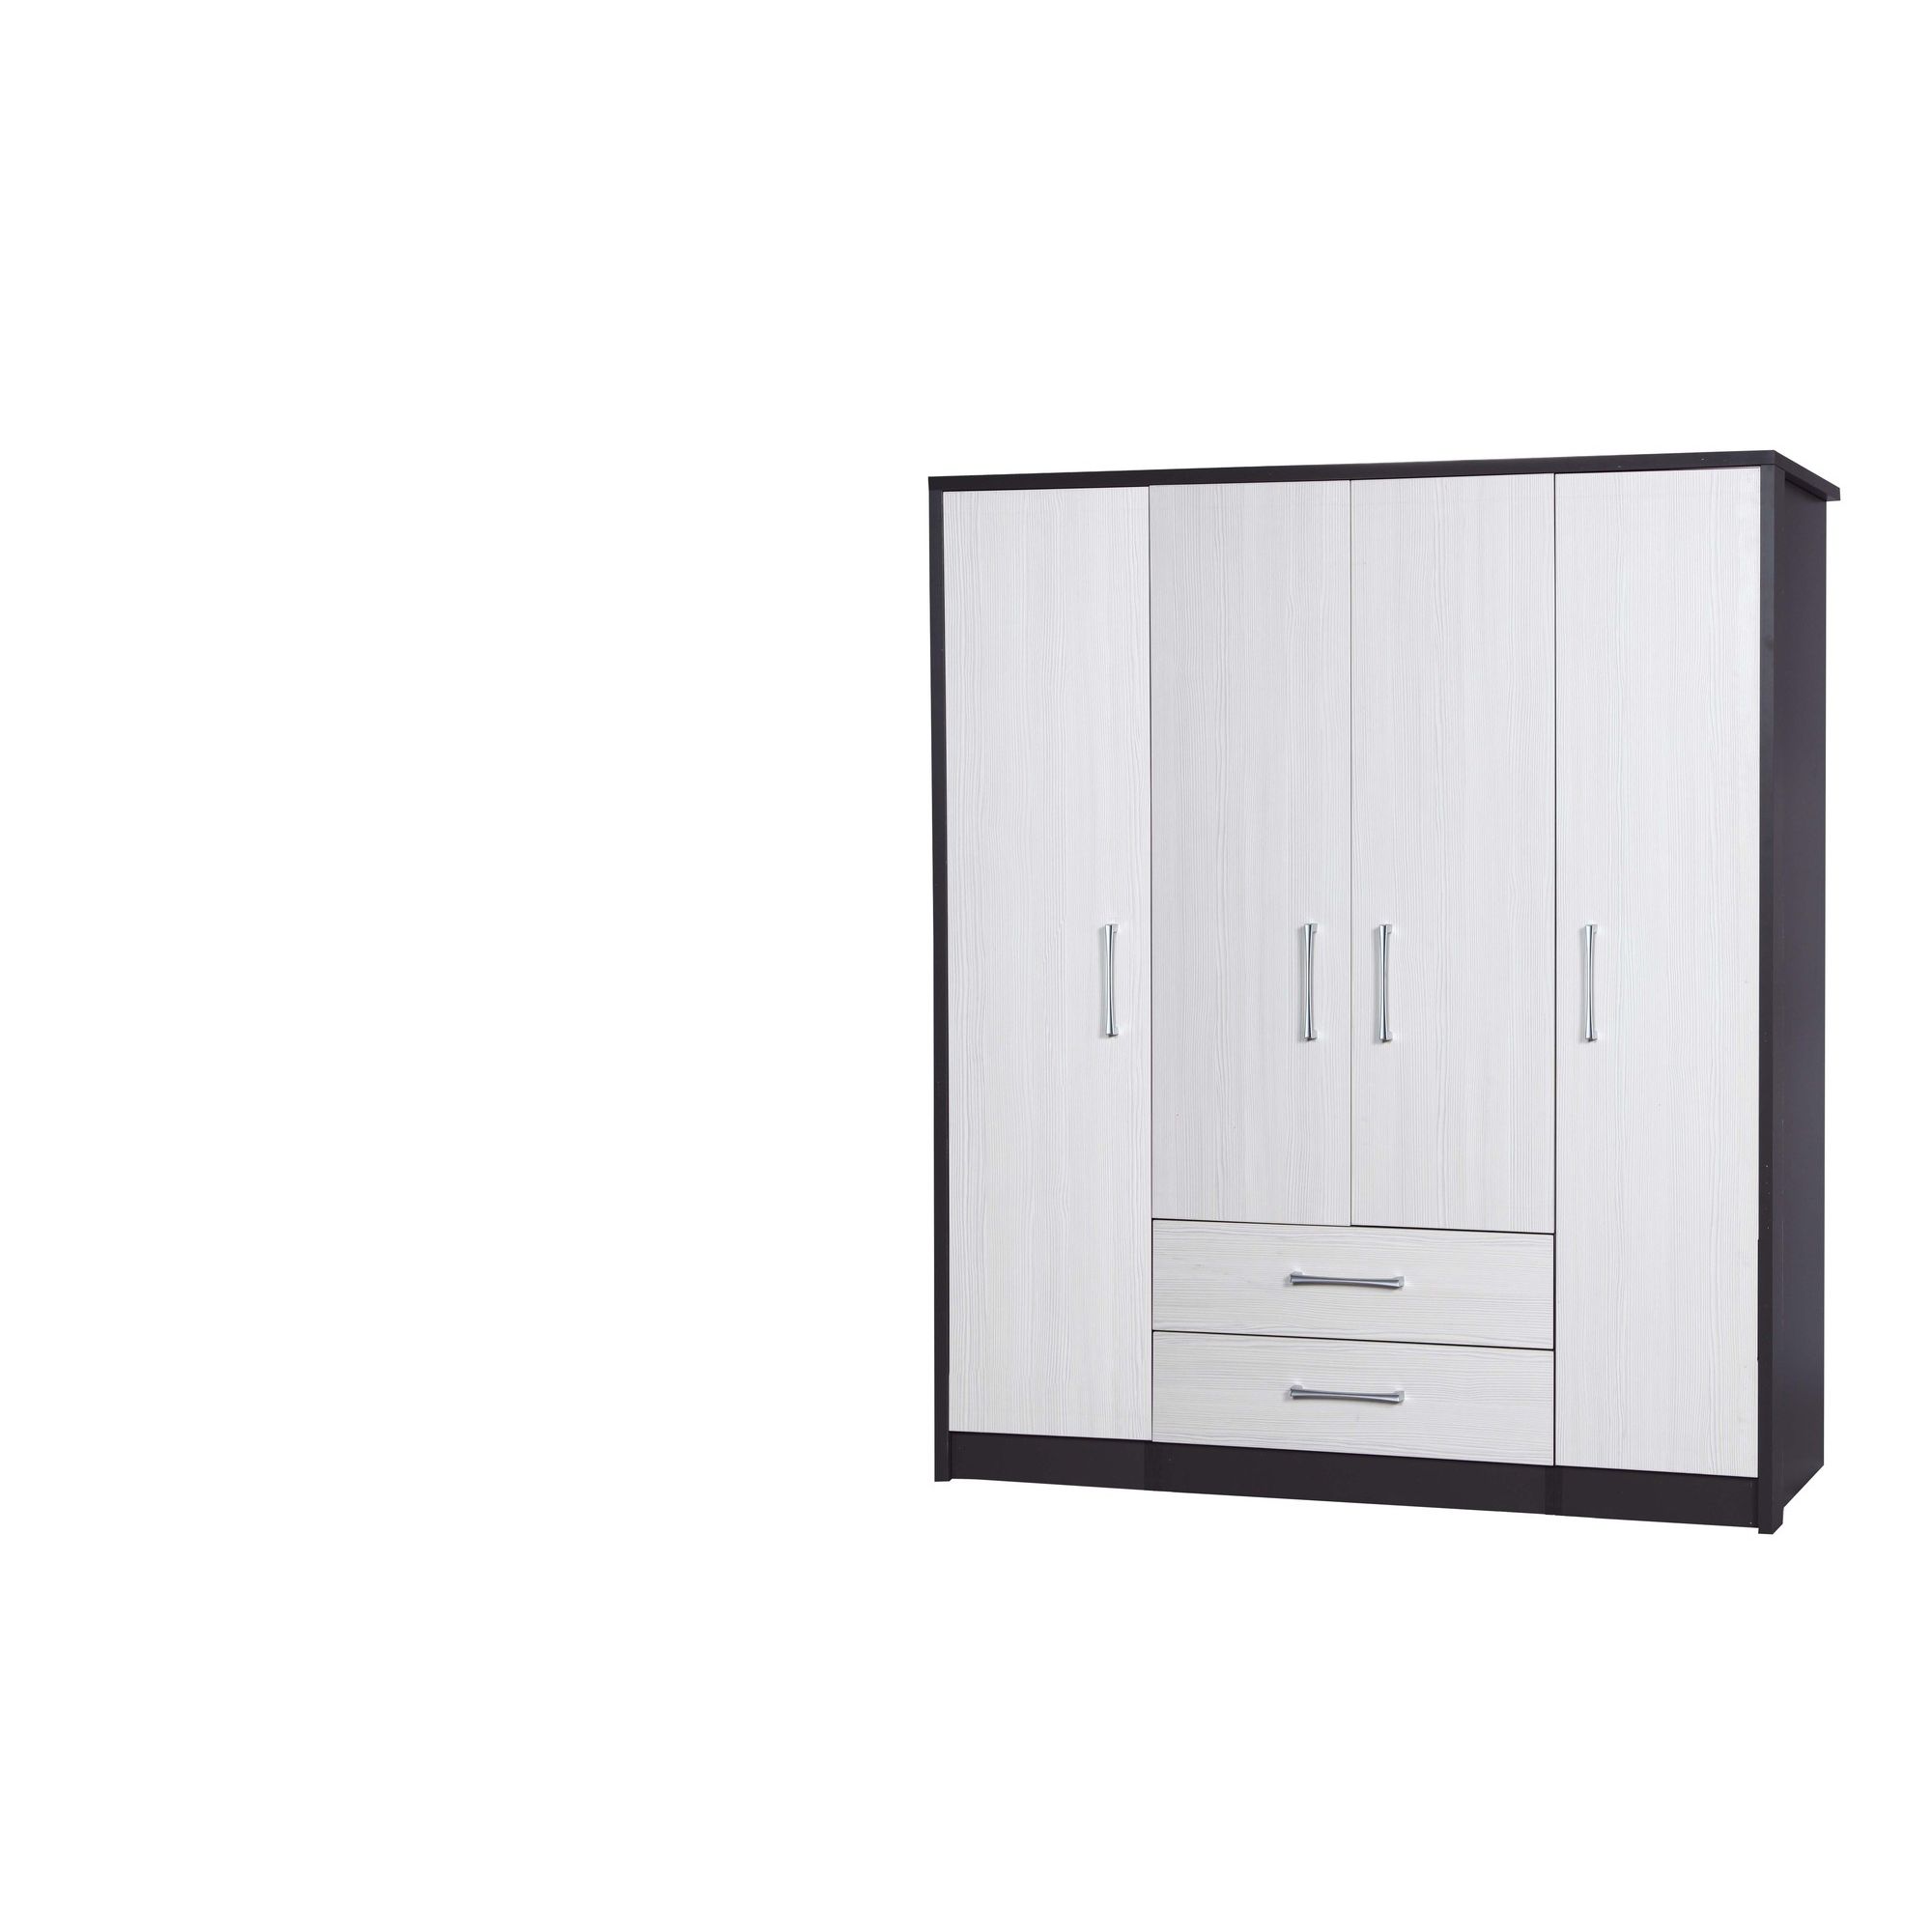 Alto Furniture Avola 4 Door Combi and Singles Wardrobe - Grey Carcass With White Avola at Tesco Direct